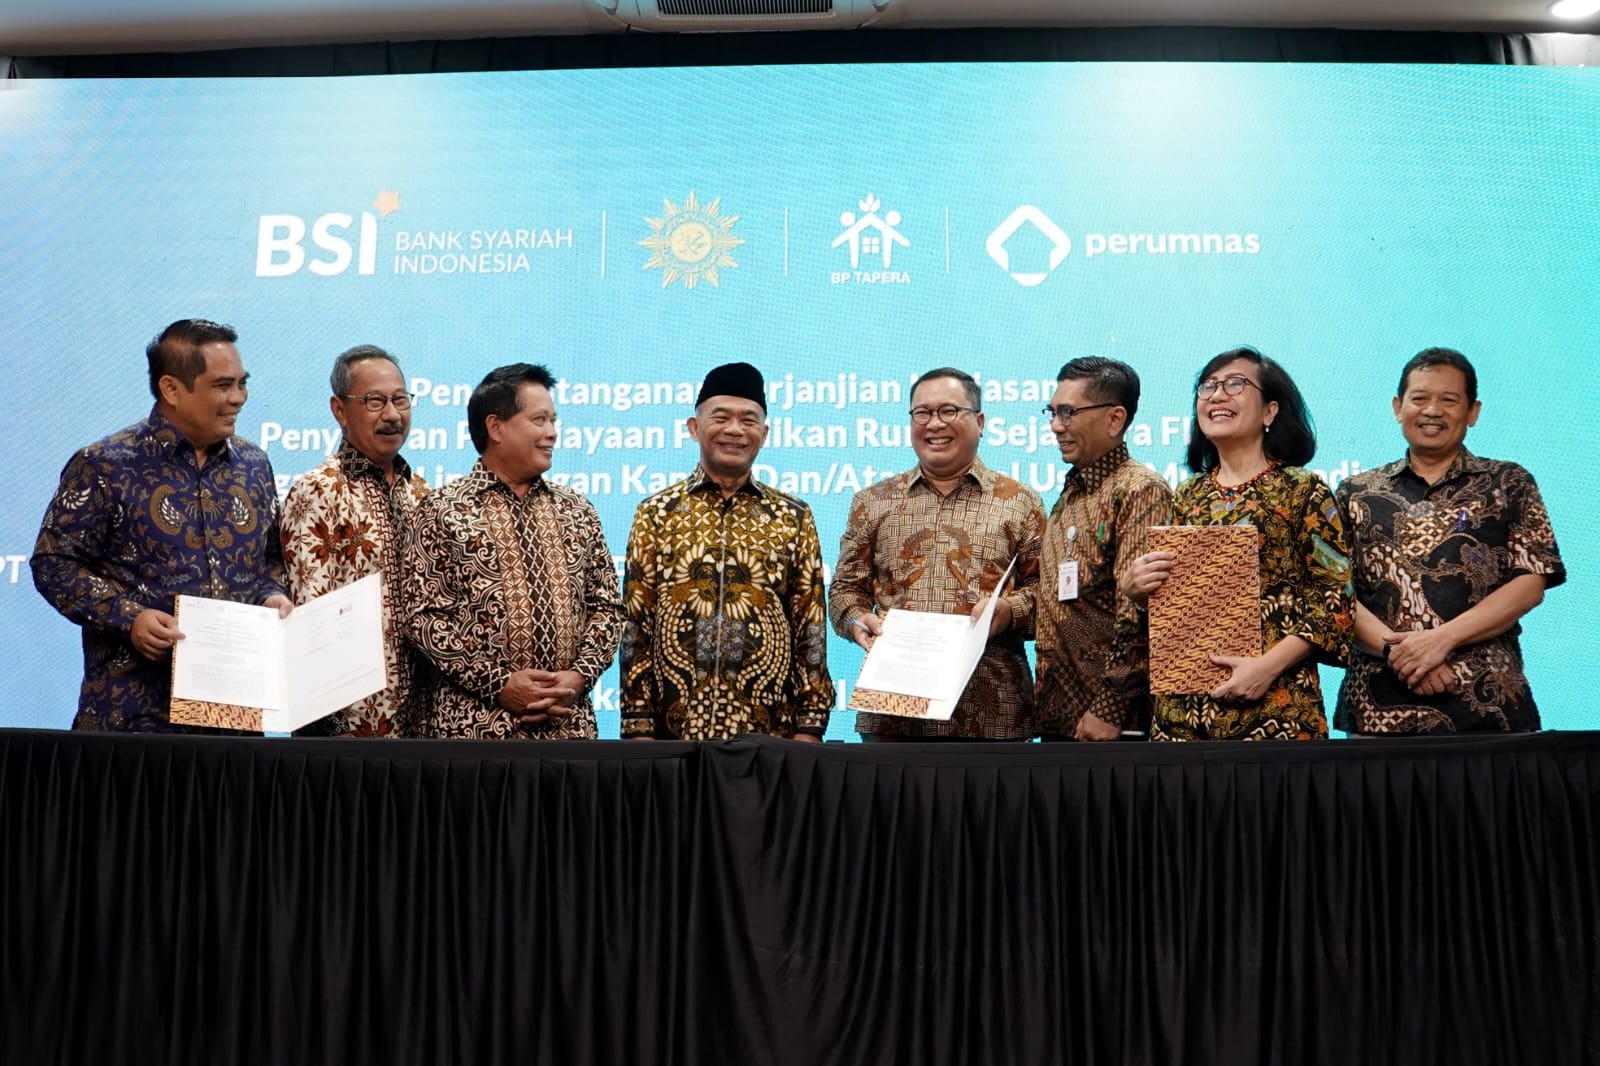 BSI, PP Muhammadiyah, BP Tapera, & Perumnas Kolaborasi Penyaluran KPR Syariah